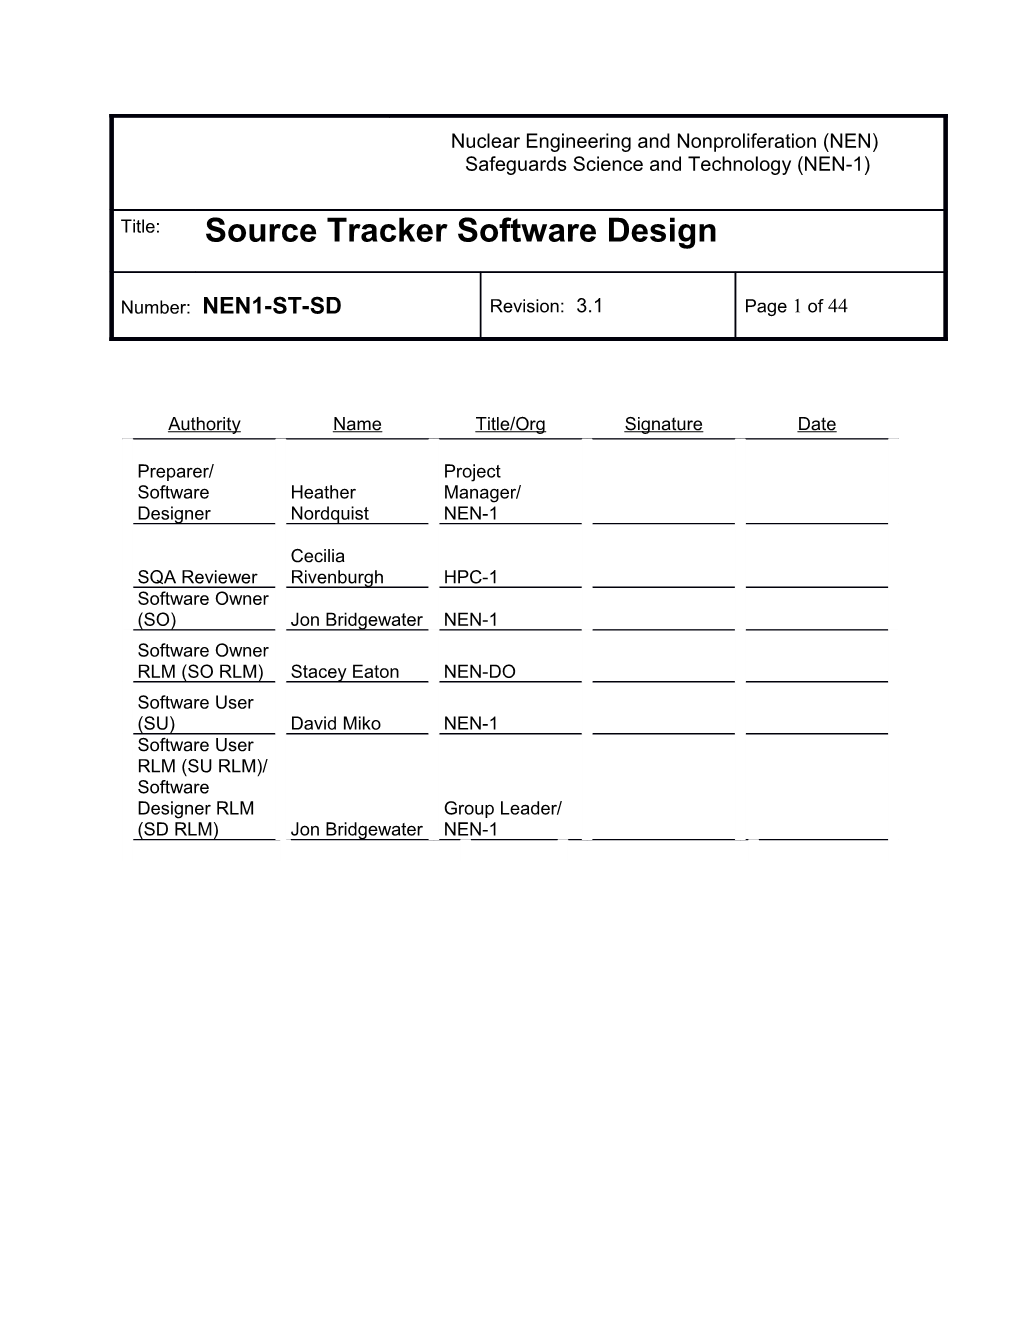 Source Tracker Software Design